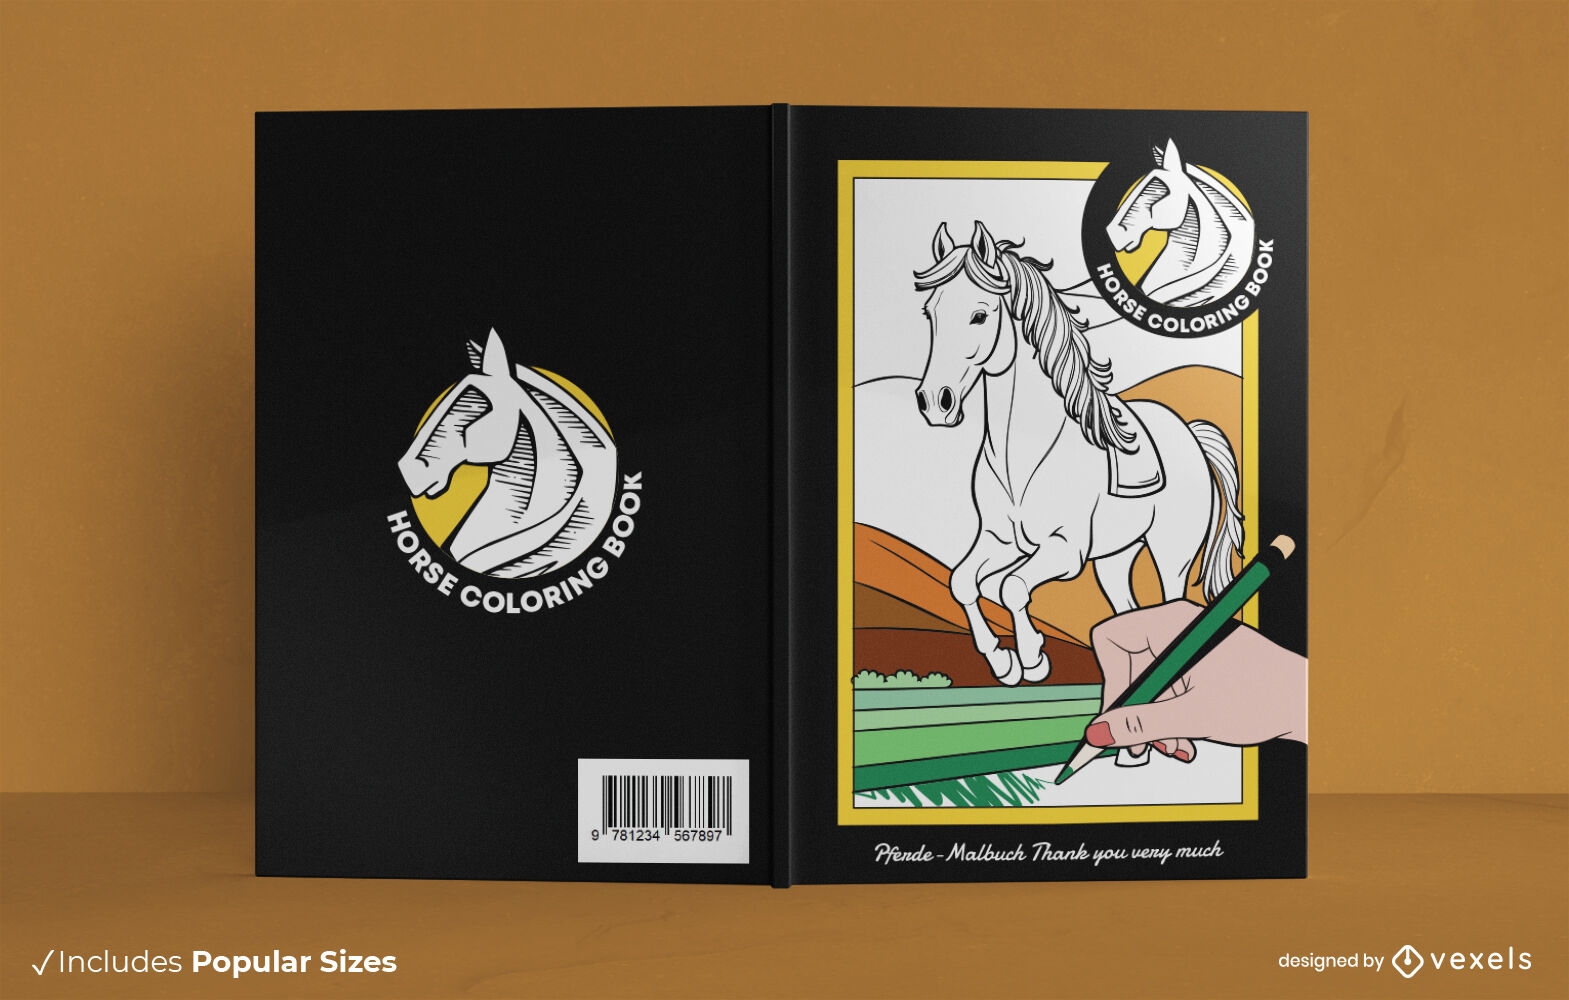 Horse coloring book cover design